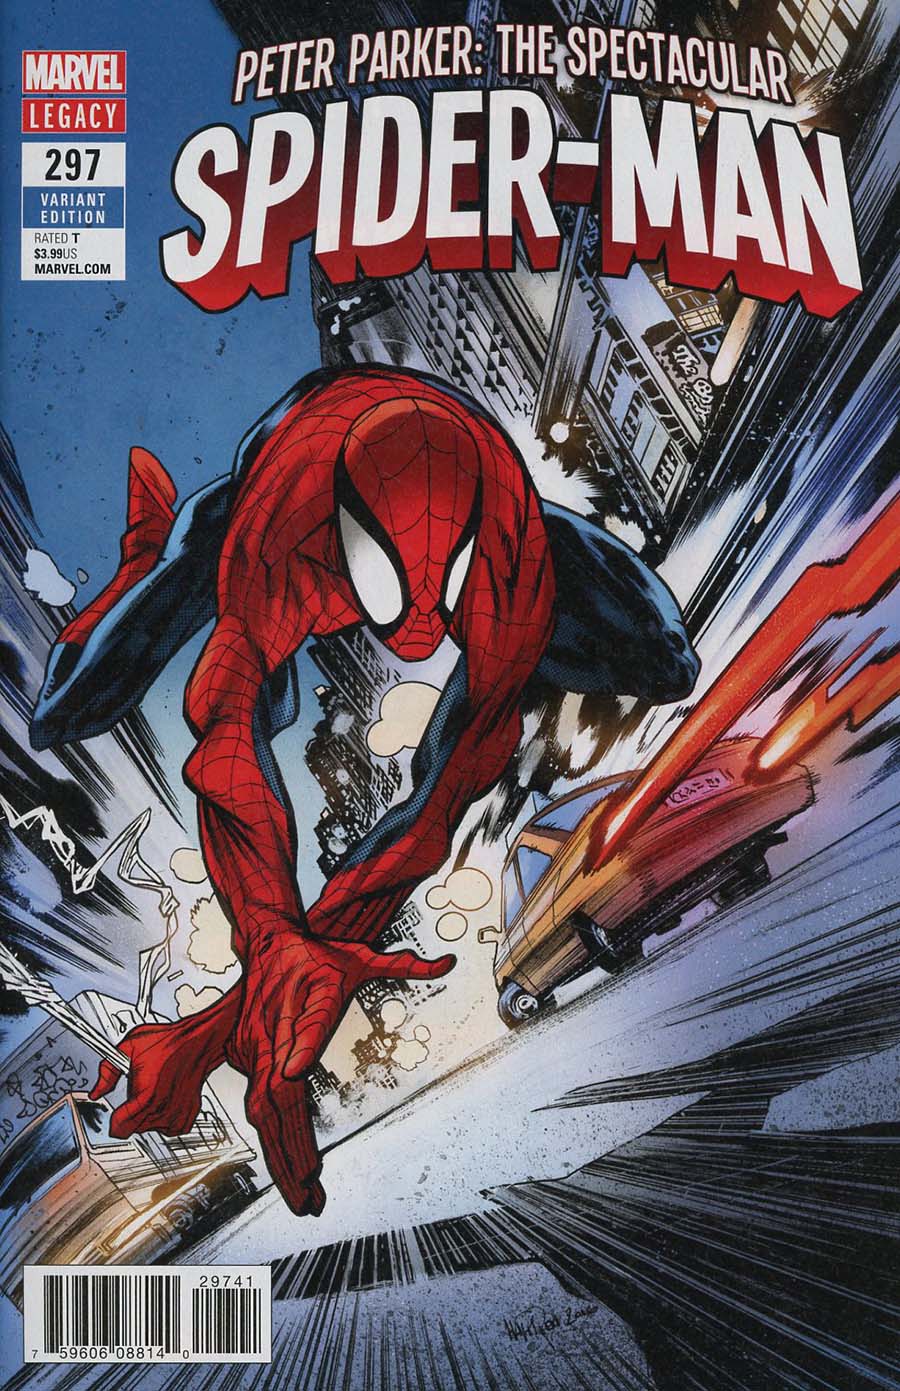 Peter Parker Spectacular Spider-Man #297 Cover D Incentive James Harren Variant Cover (Marvel Legacy Tie-In)